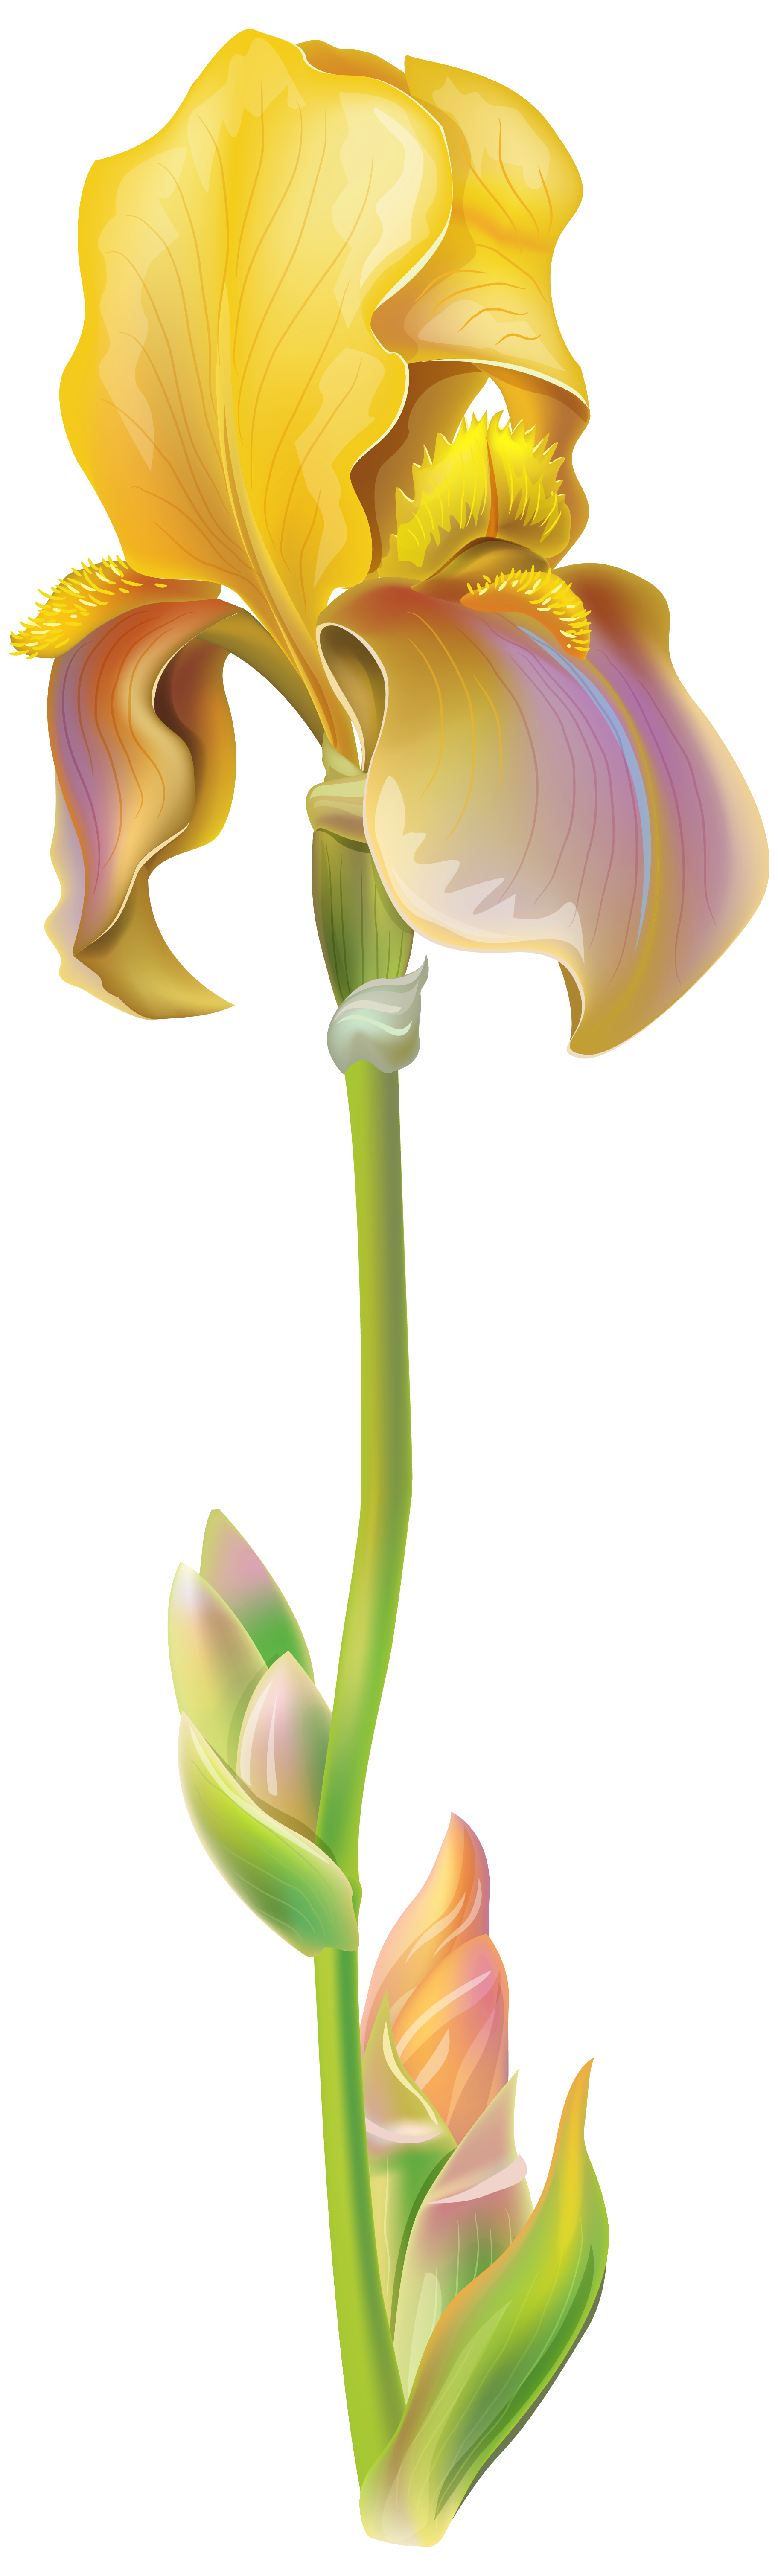 free iris flower clipart - photo #22